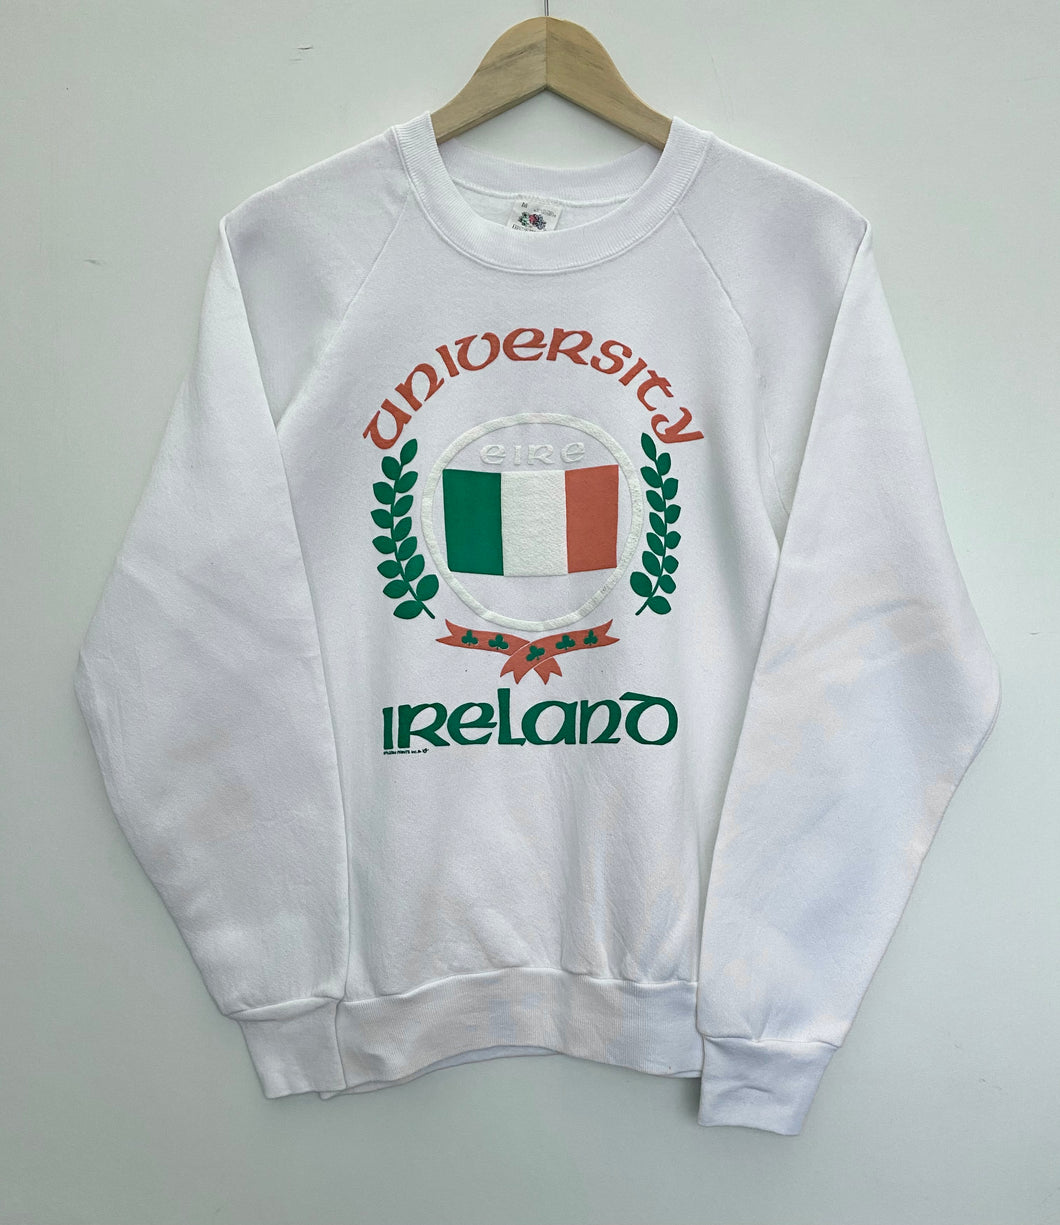 Printed ‘Ireland’ sweatshirt (S)